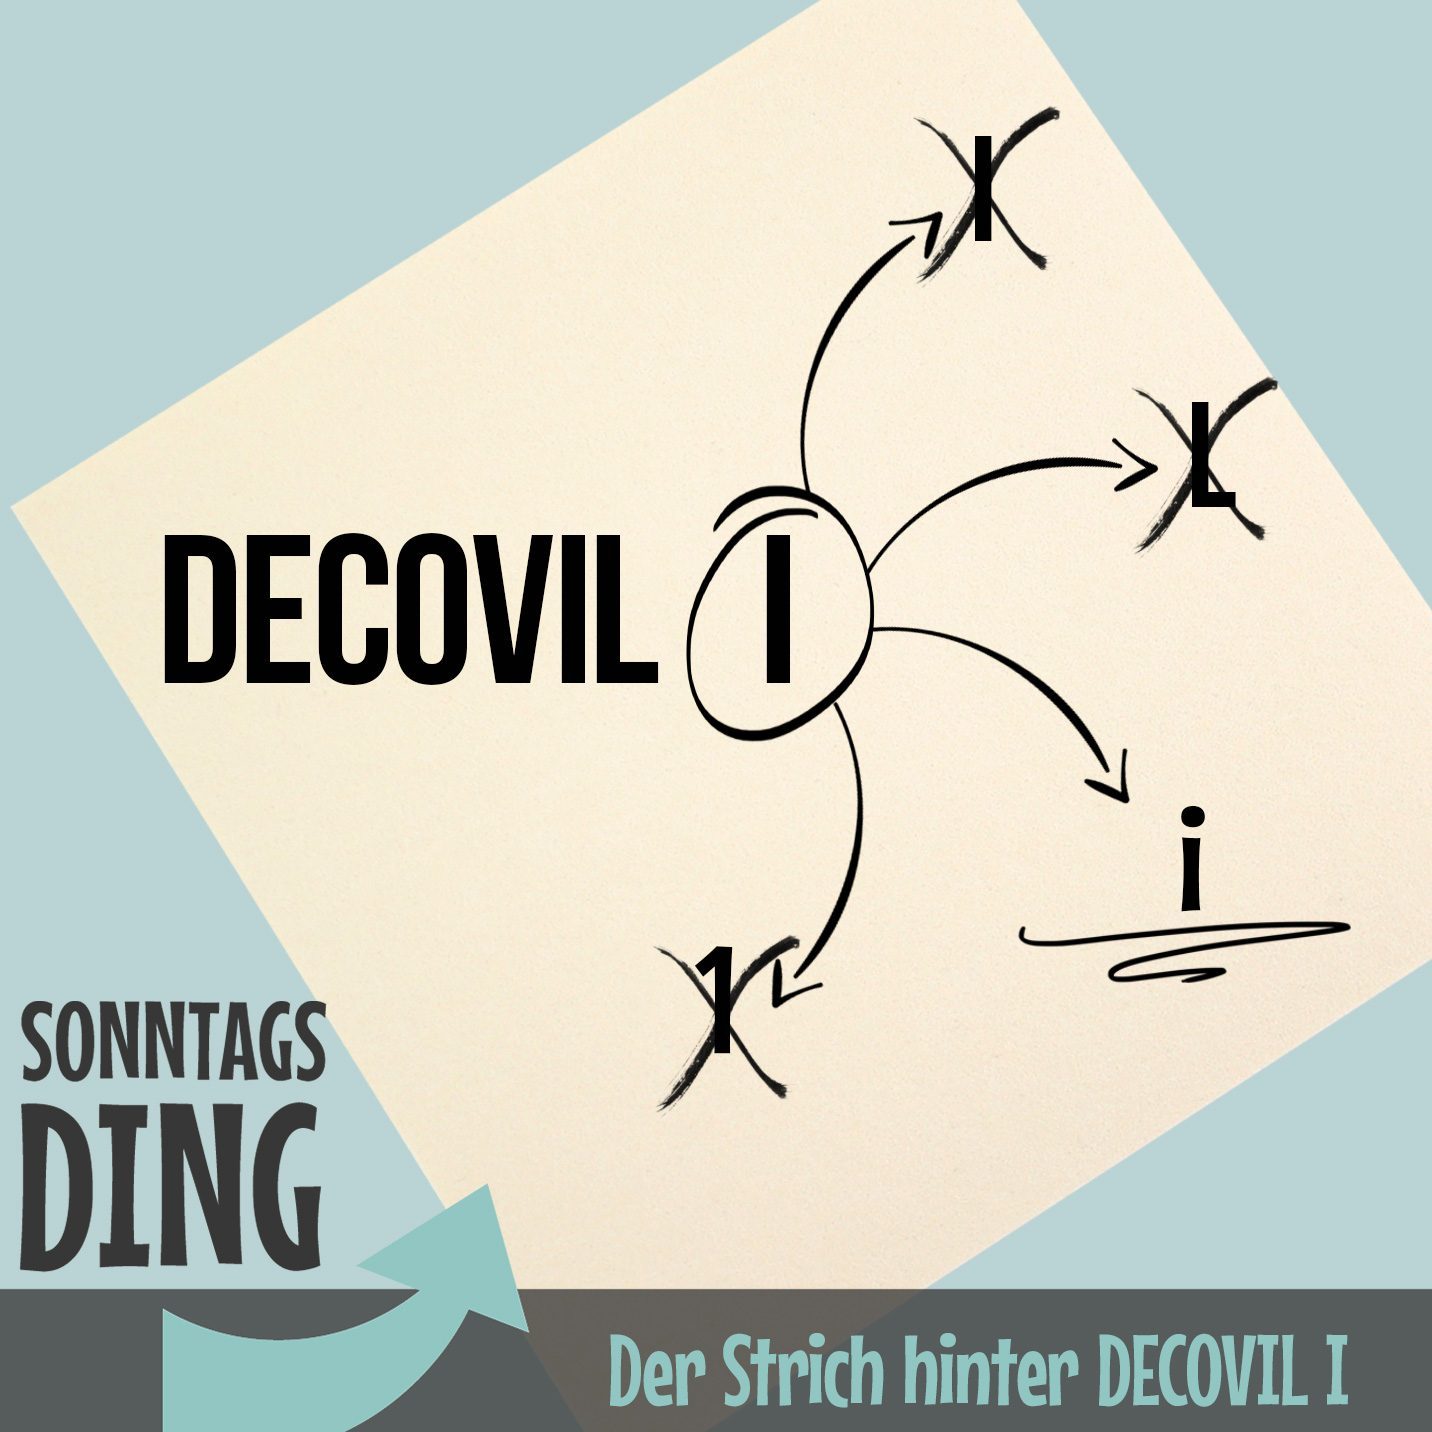 Sonntagsding: Decovil light oder Decovil 1?